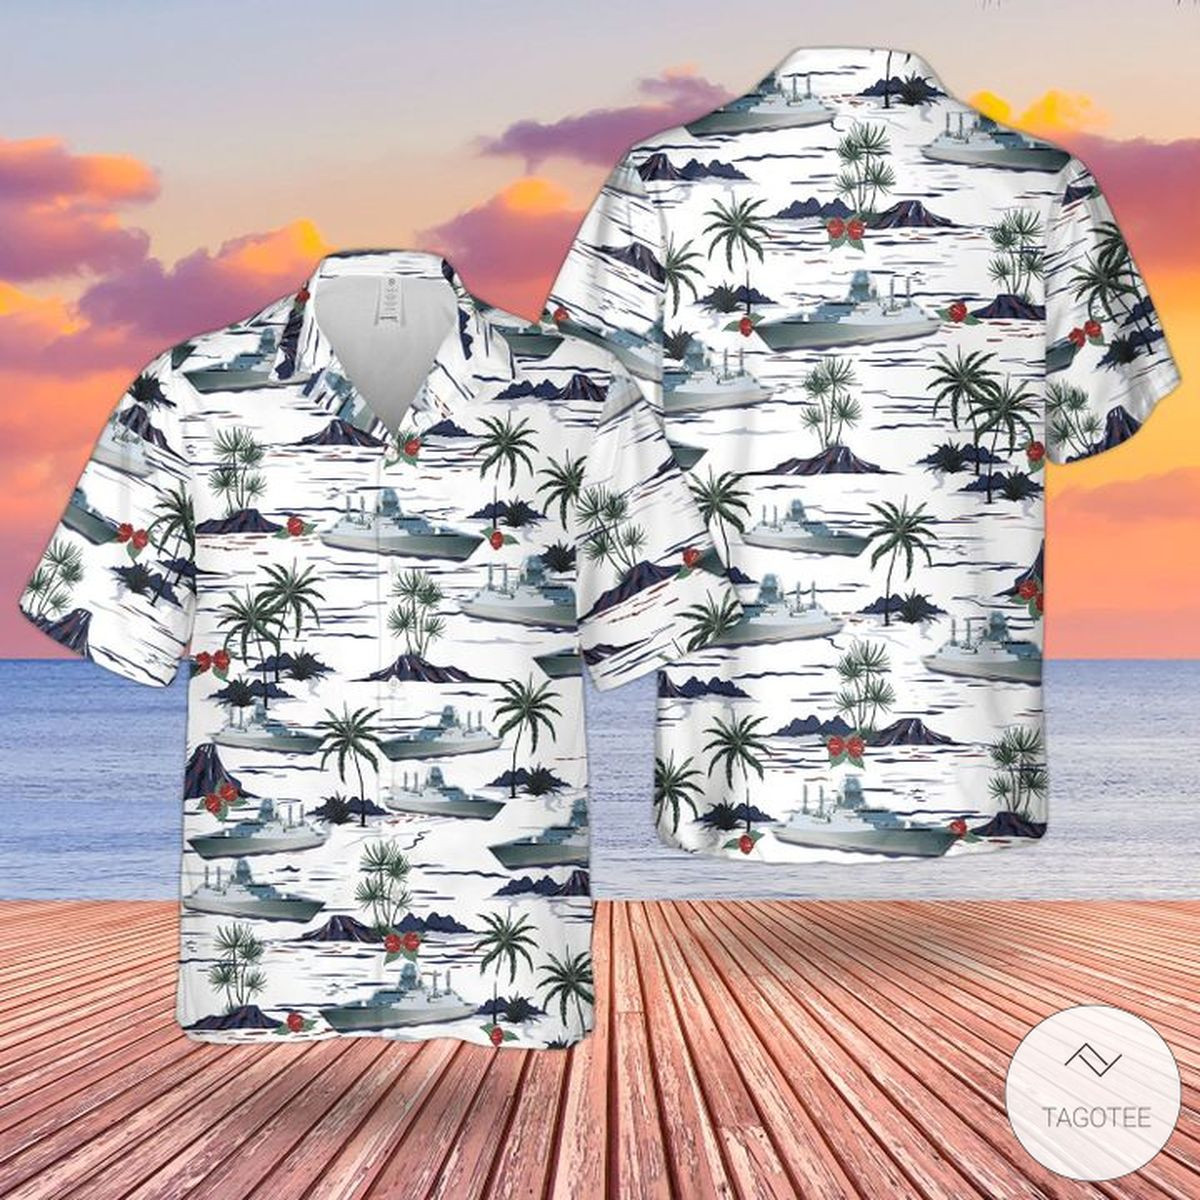 Rn City Class Type 26 Frigate Hawaiian Shirts